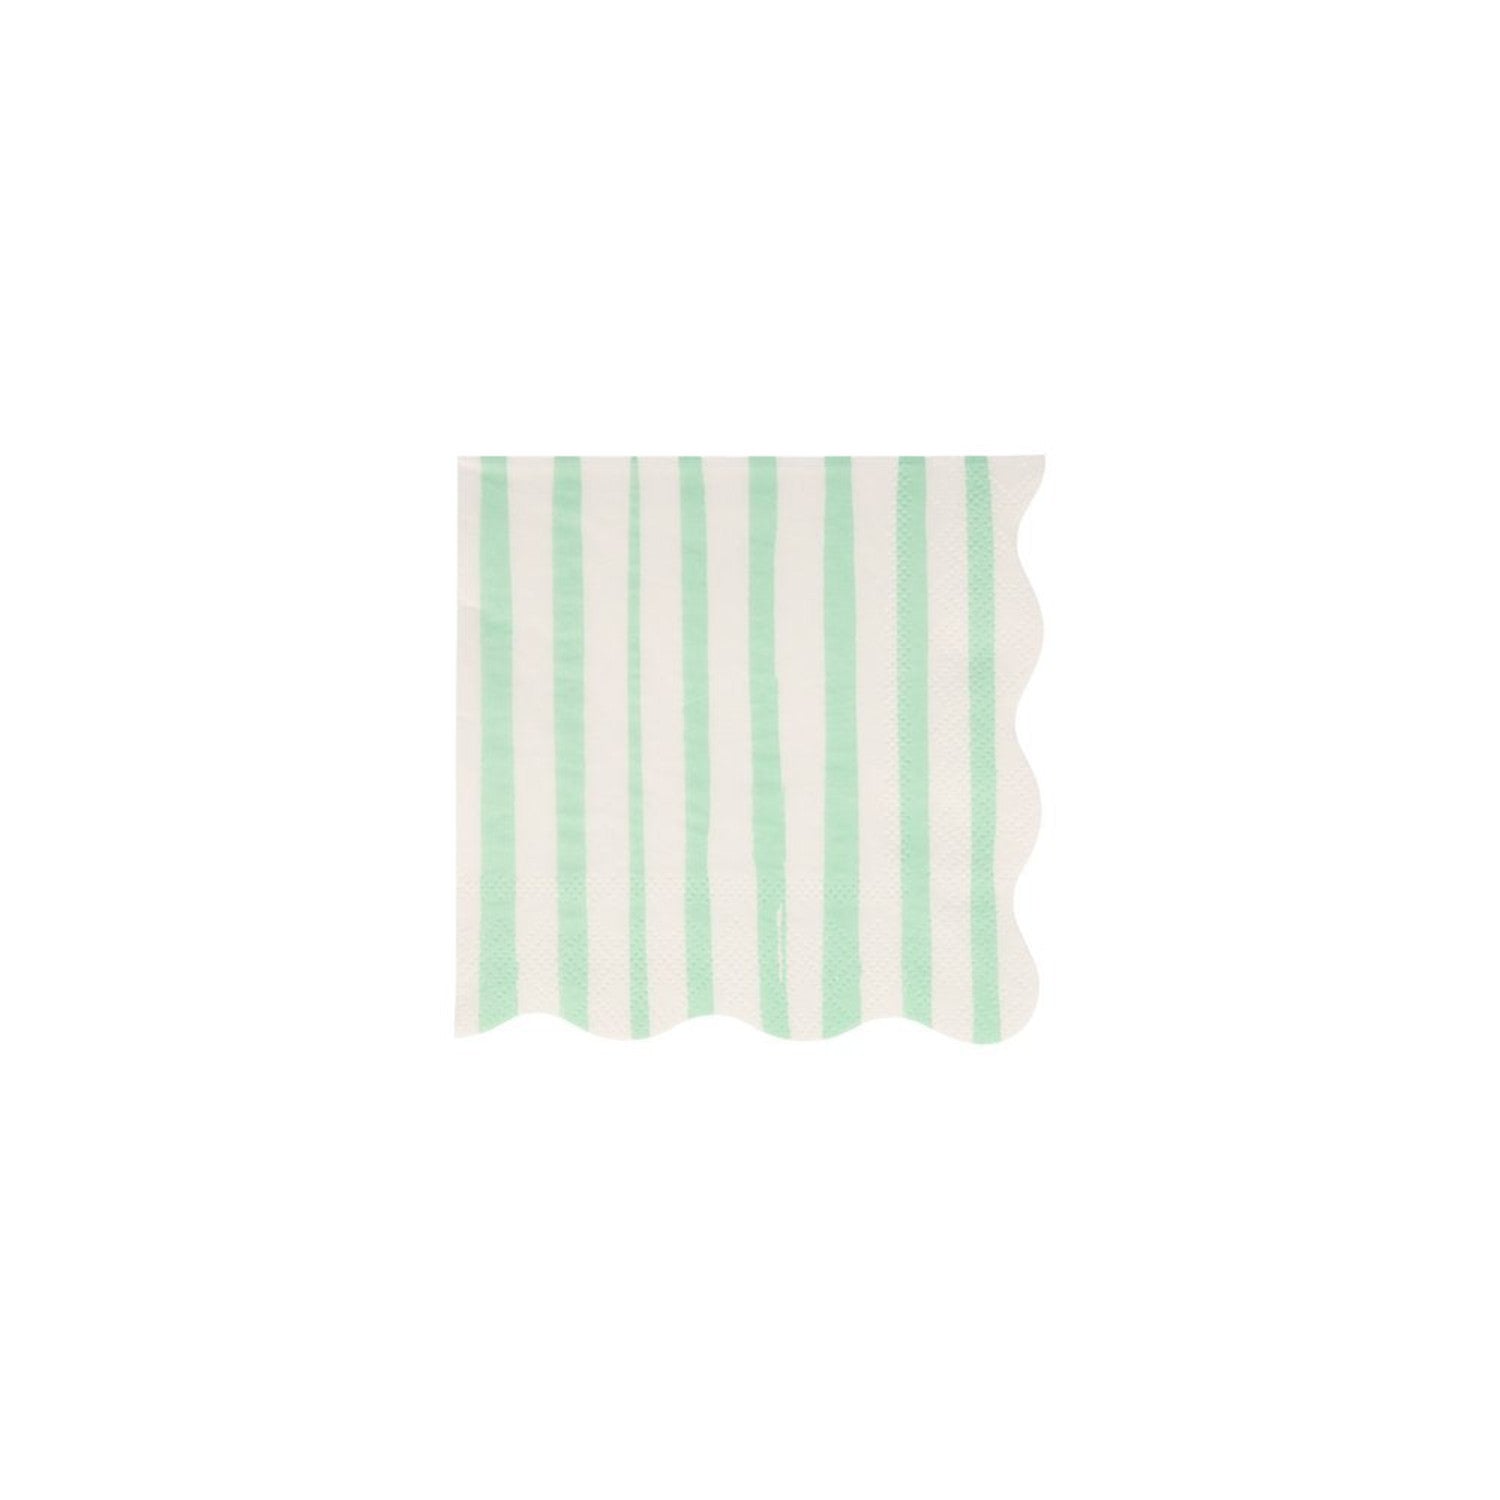 Green and white striped, eco-friendly fabric swatch with a scalloped edge, like the Meri Meri Mint Stripe Napkin.